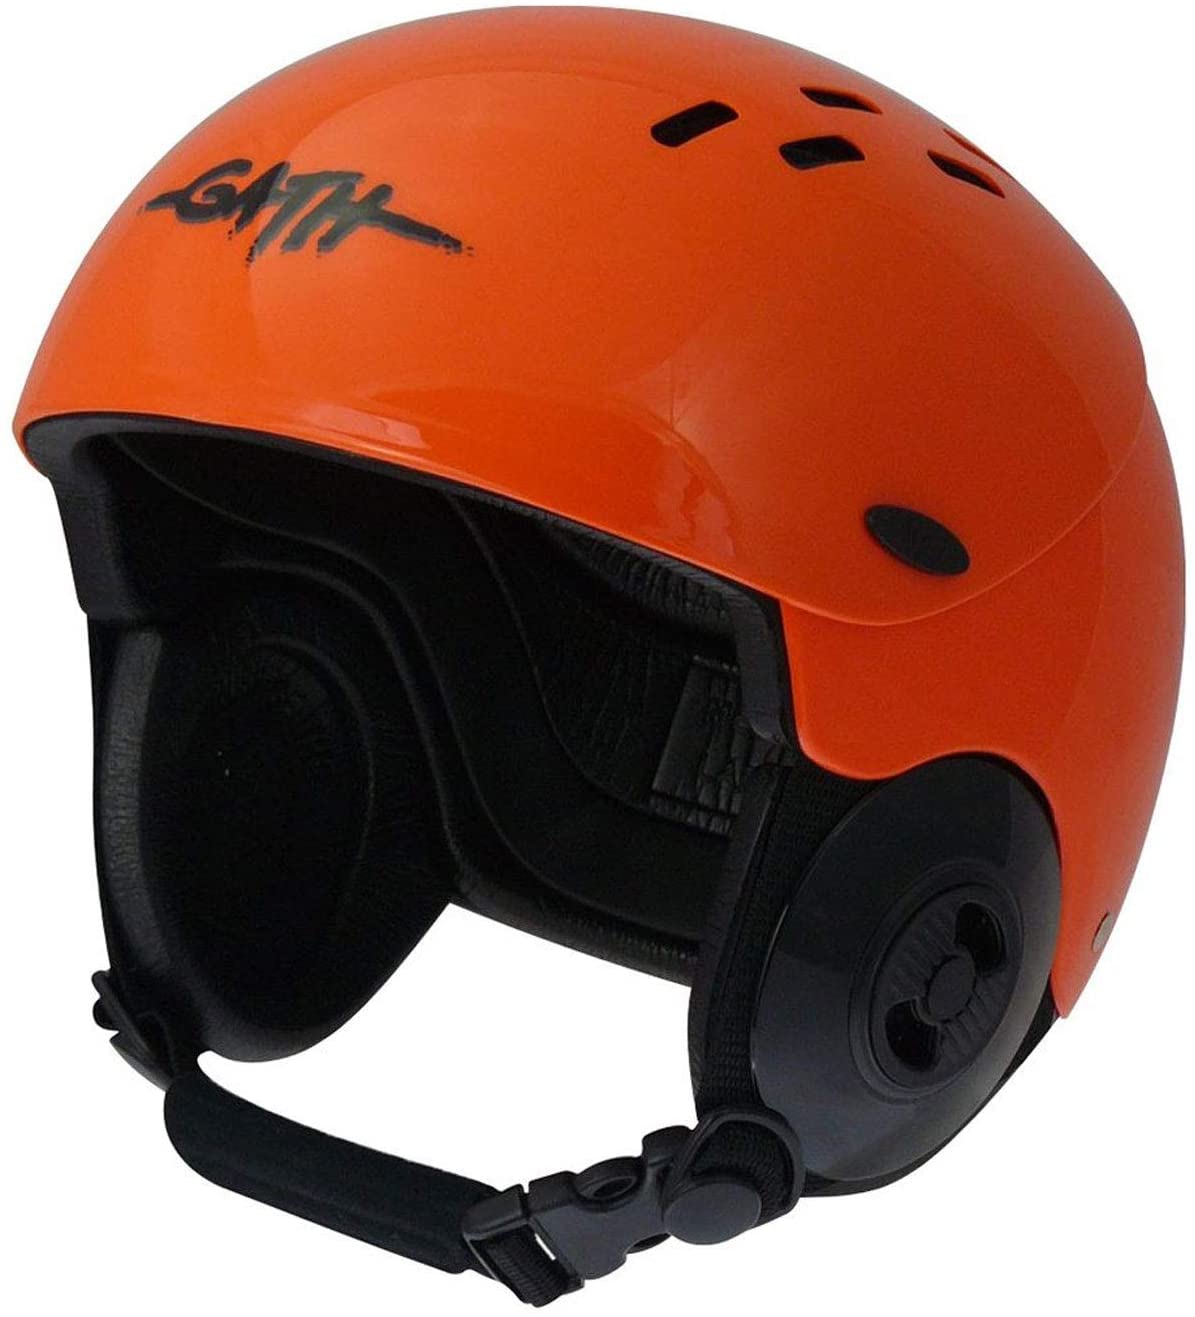 Gath Gedi Surf Safety Helmet with Peak